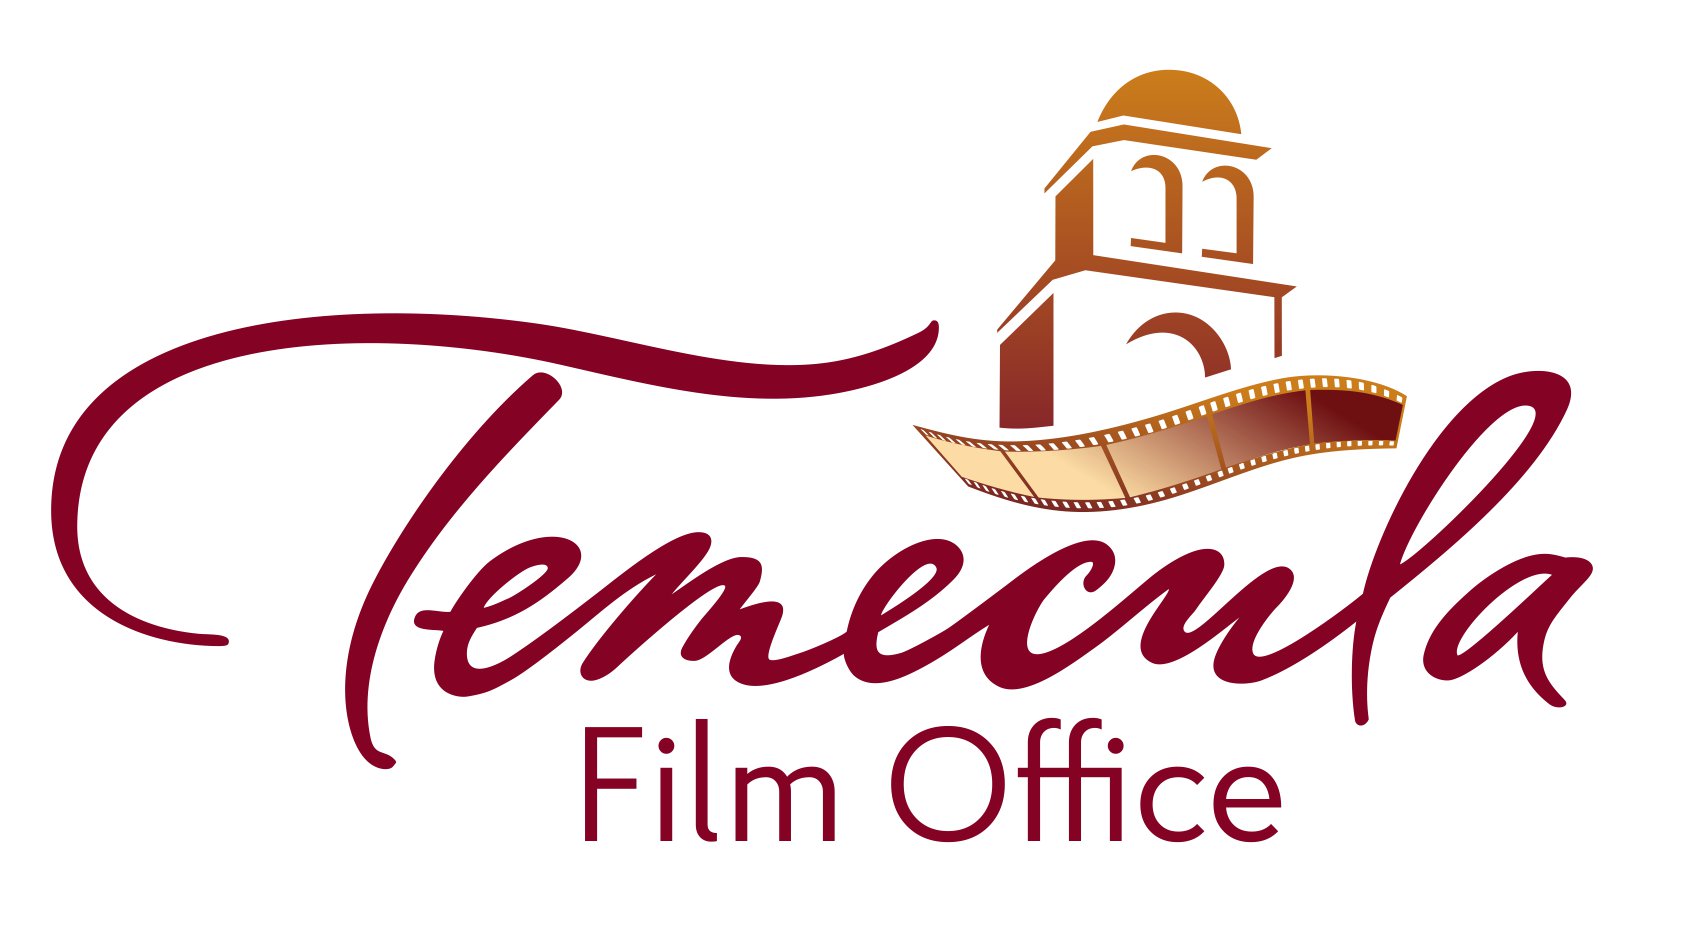 Temecula Film Office